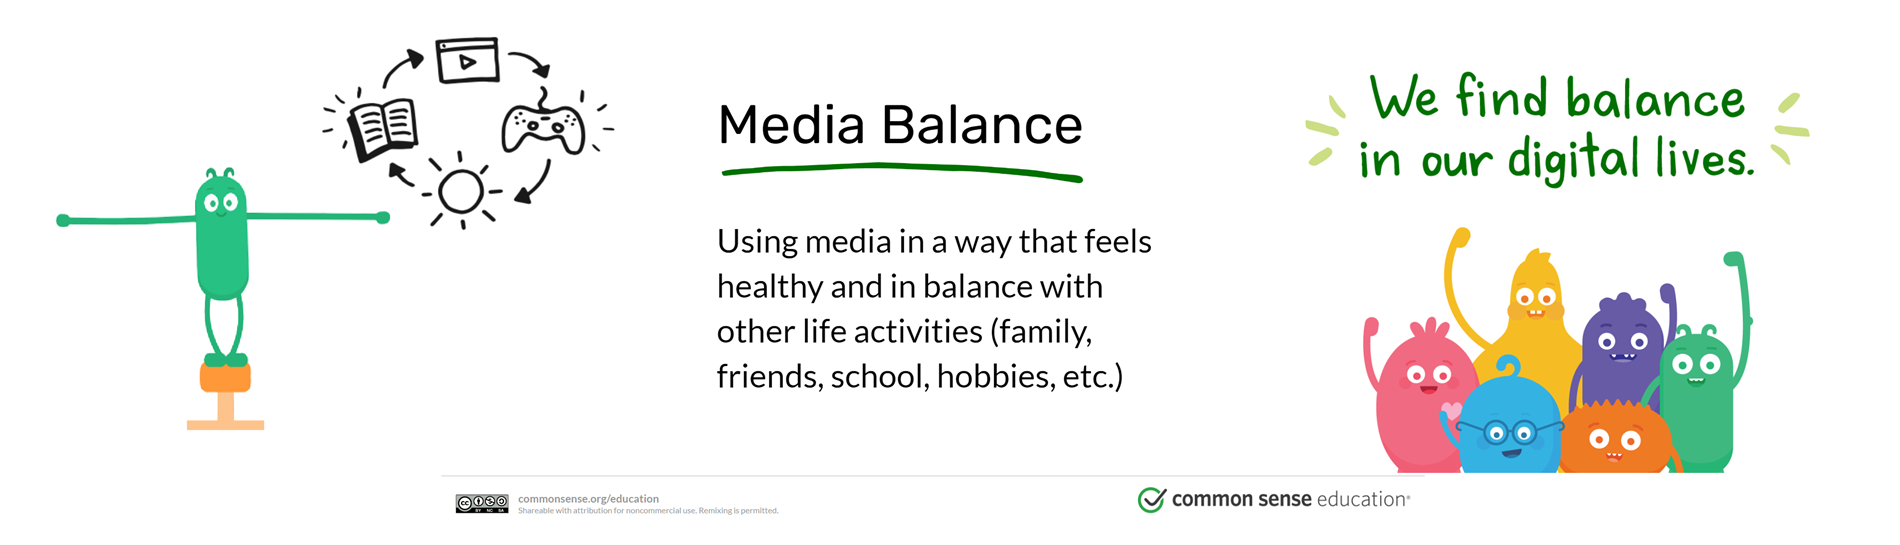 media balance